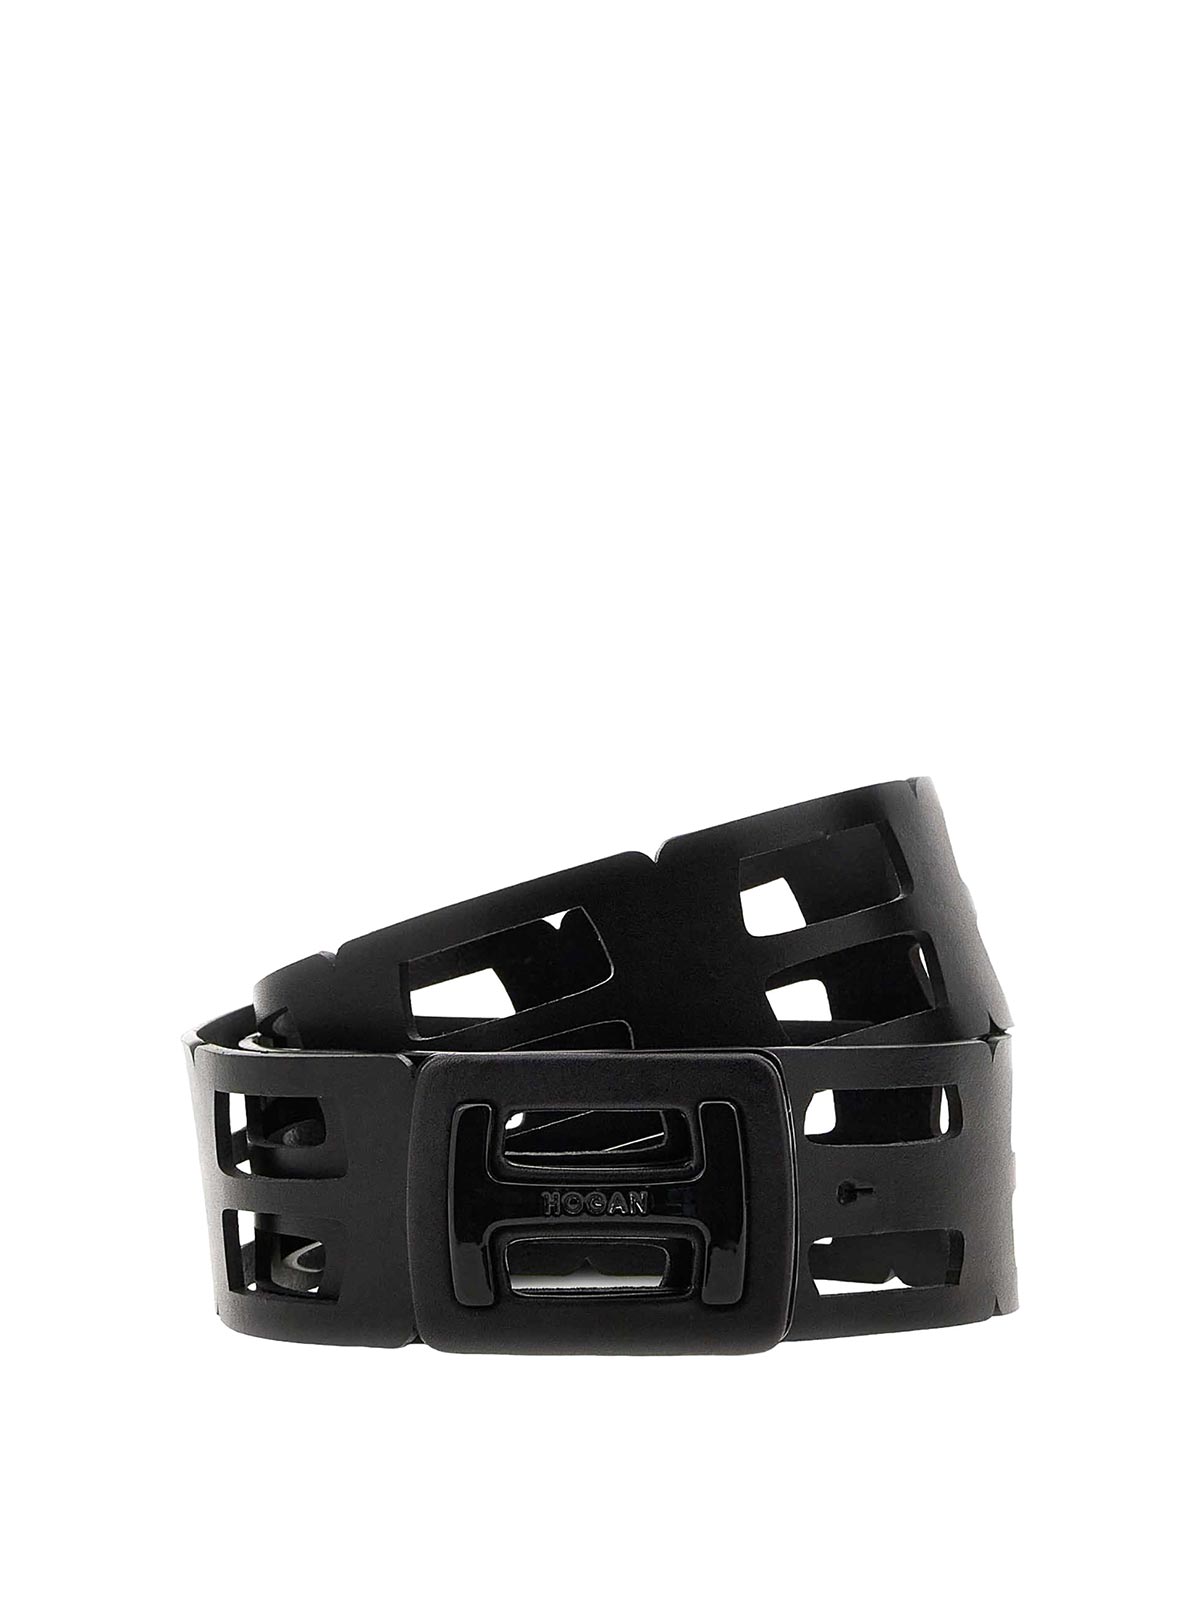 Hogan Leather Belt In Black